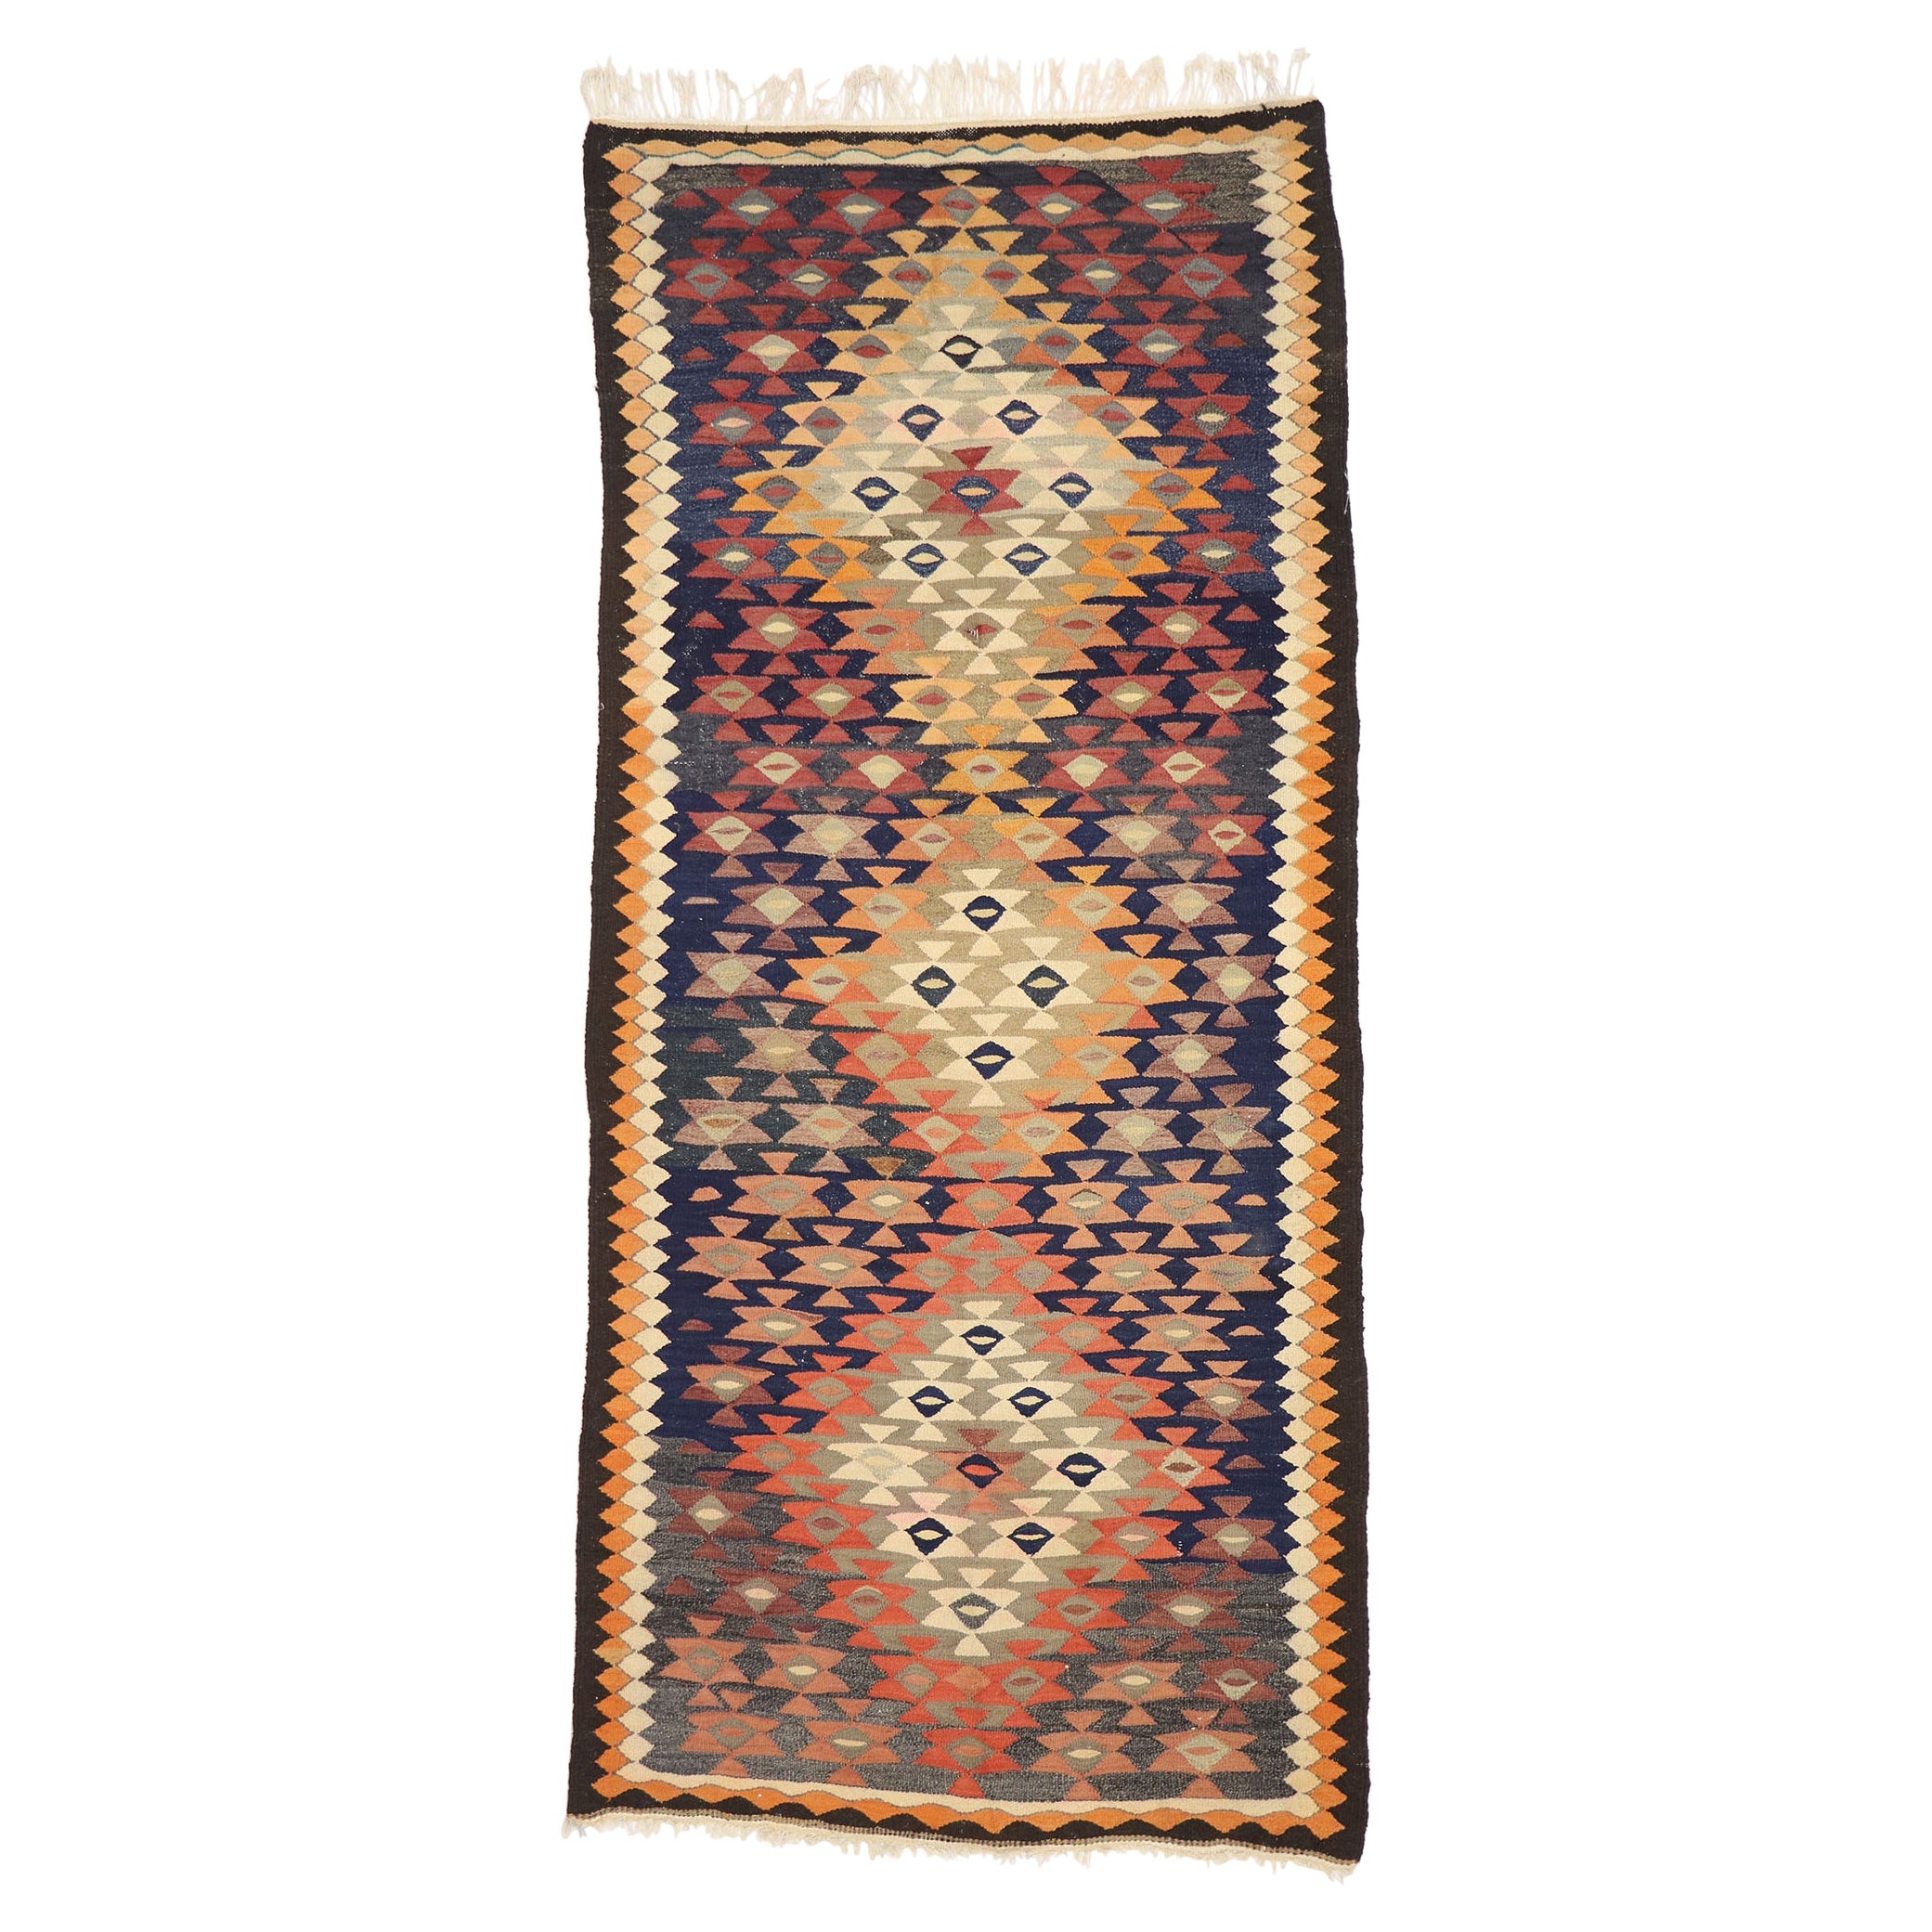 Vintage Persian Bijar Kilim Rug, Tribal Enchantment Meets Southwest Desert Chic